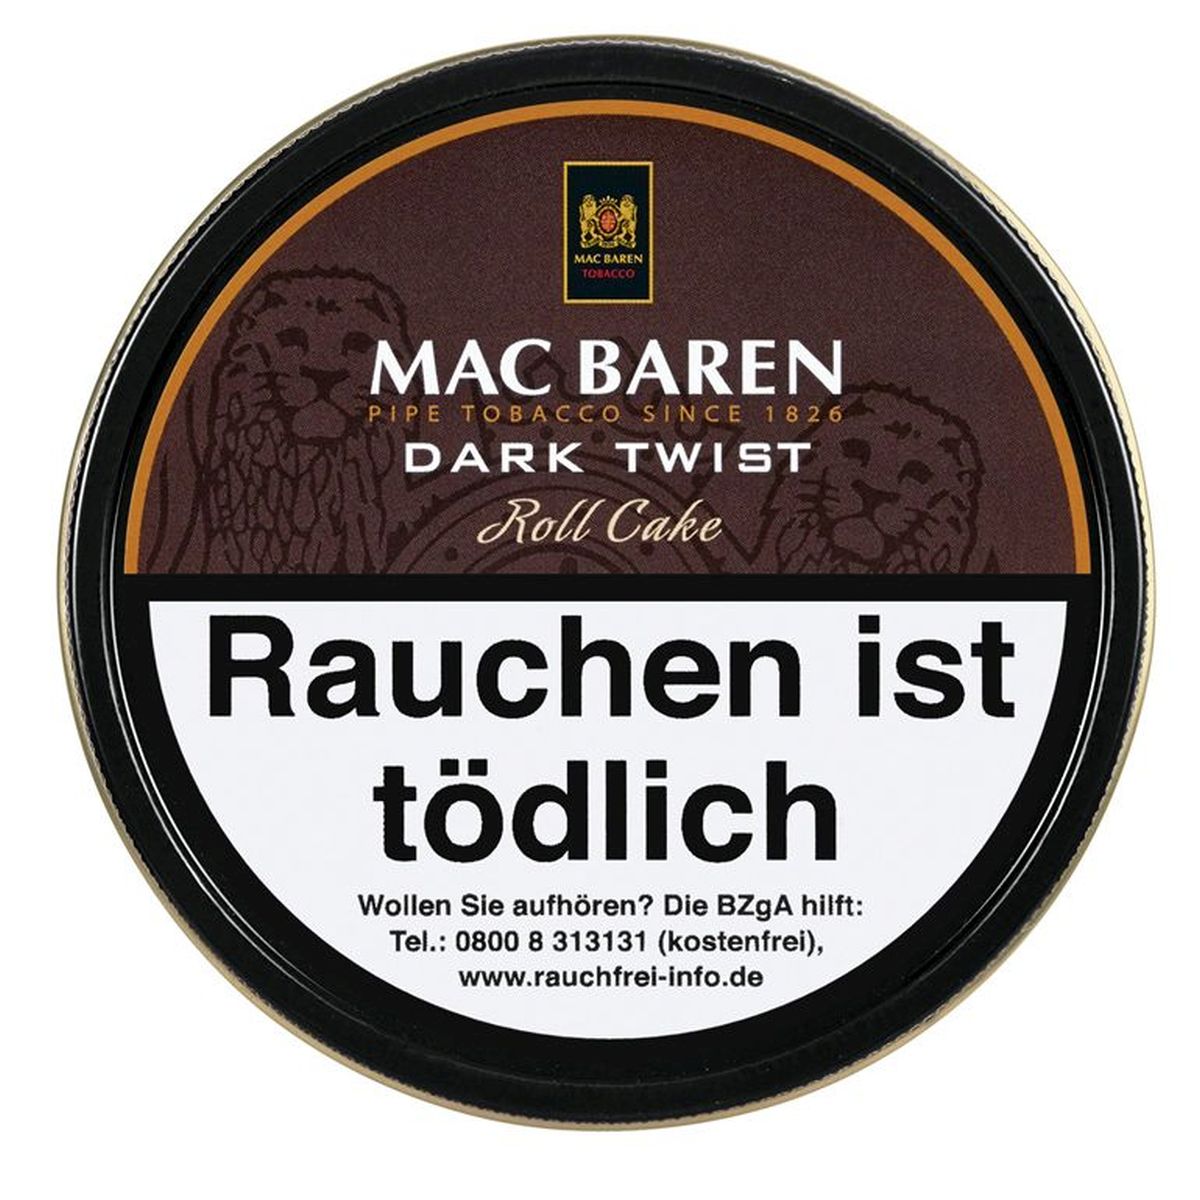 Mac Baren Mac Baren Dark Twist bei www.Tabakring.de kaufen